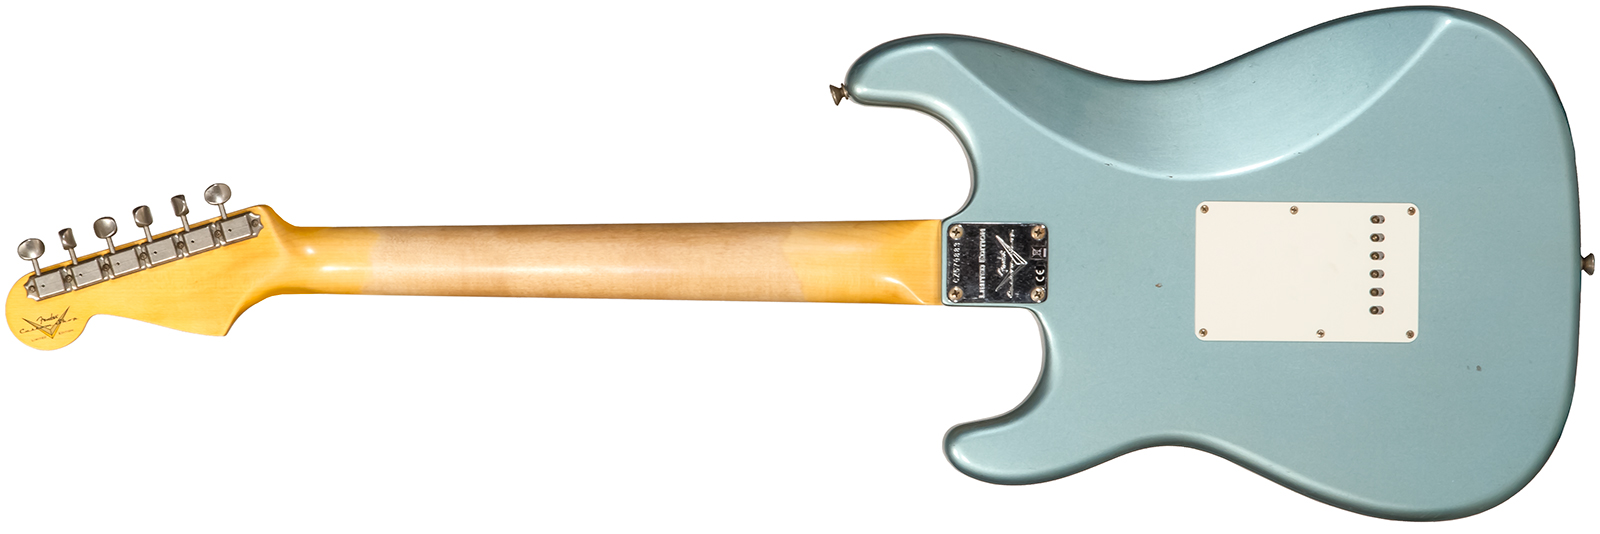 Fender Custom Shop Strat 1959 3s Trem Rw #cz570883 - Journeyman Relic Teal Green Metallic - Str shape electric guitar - Variation 1